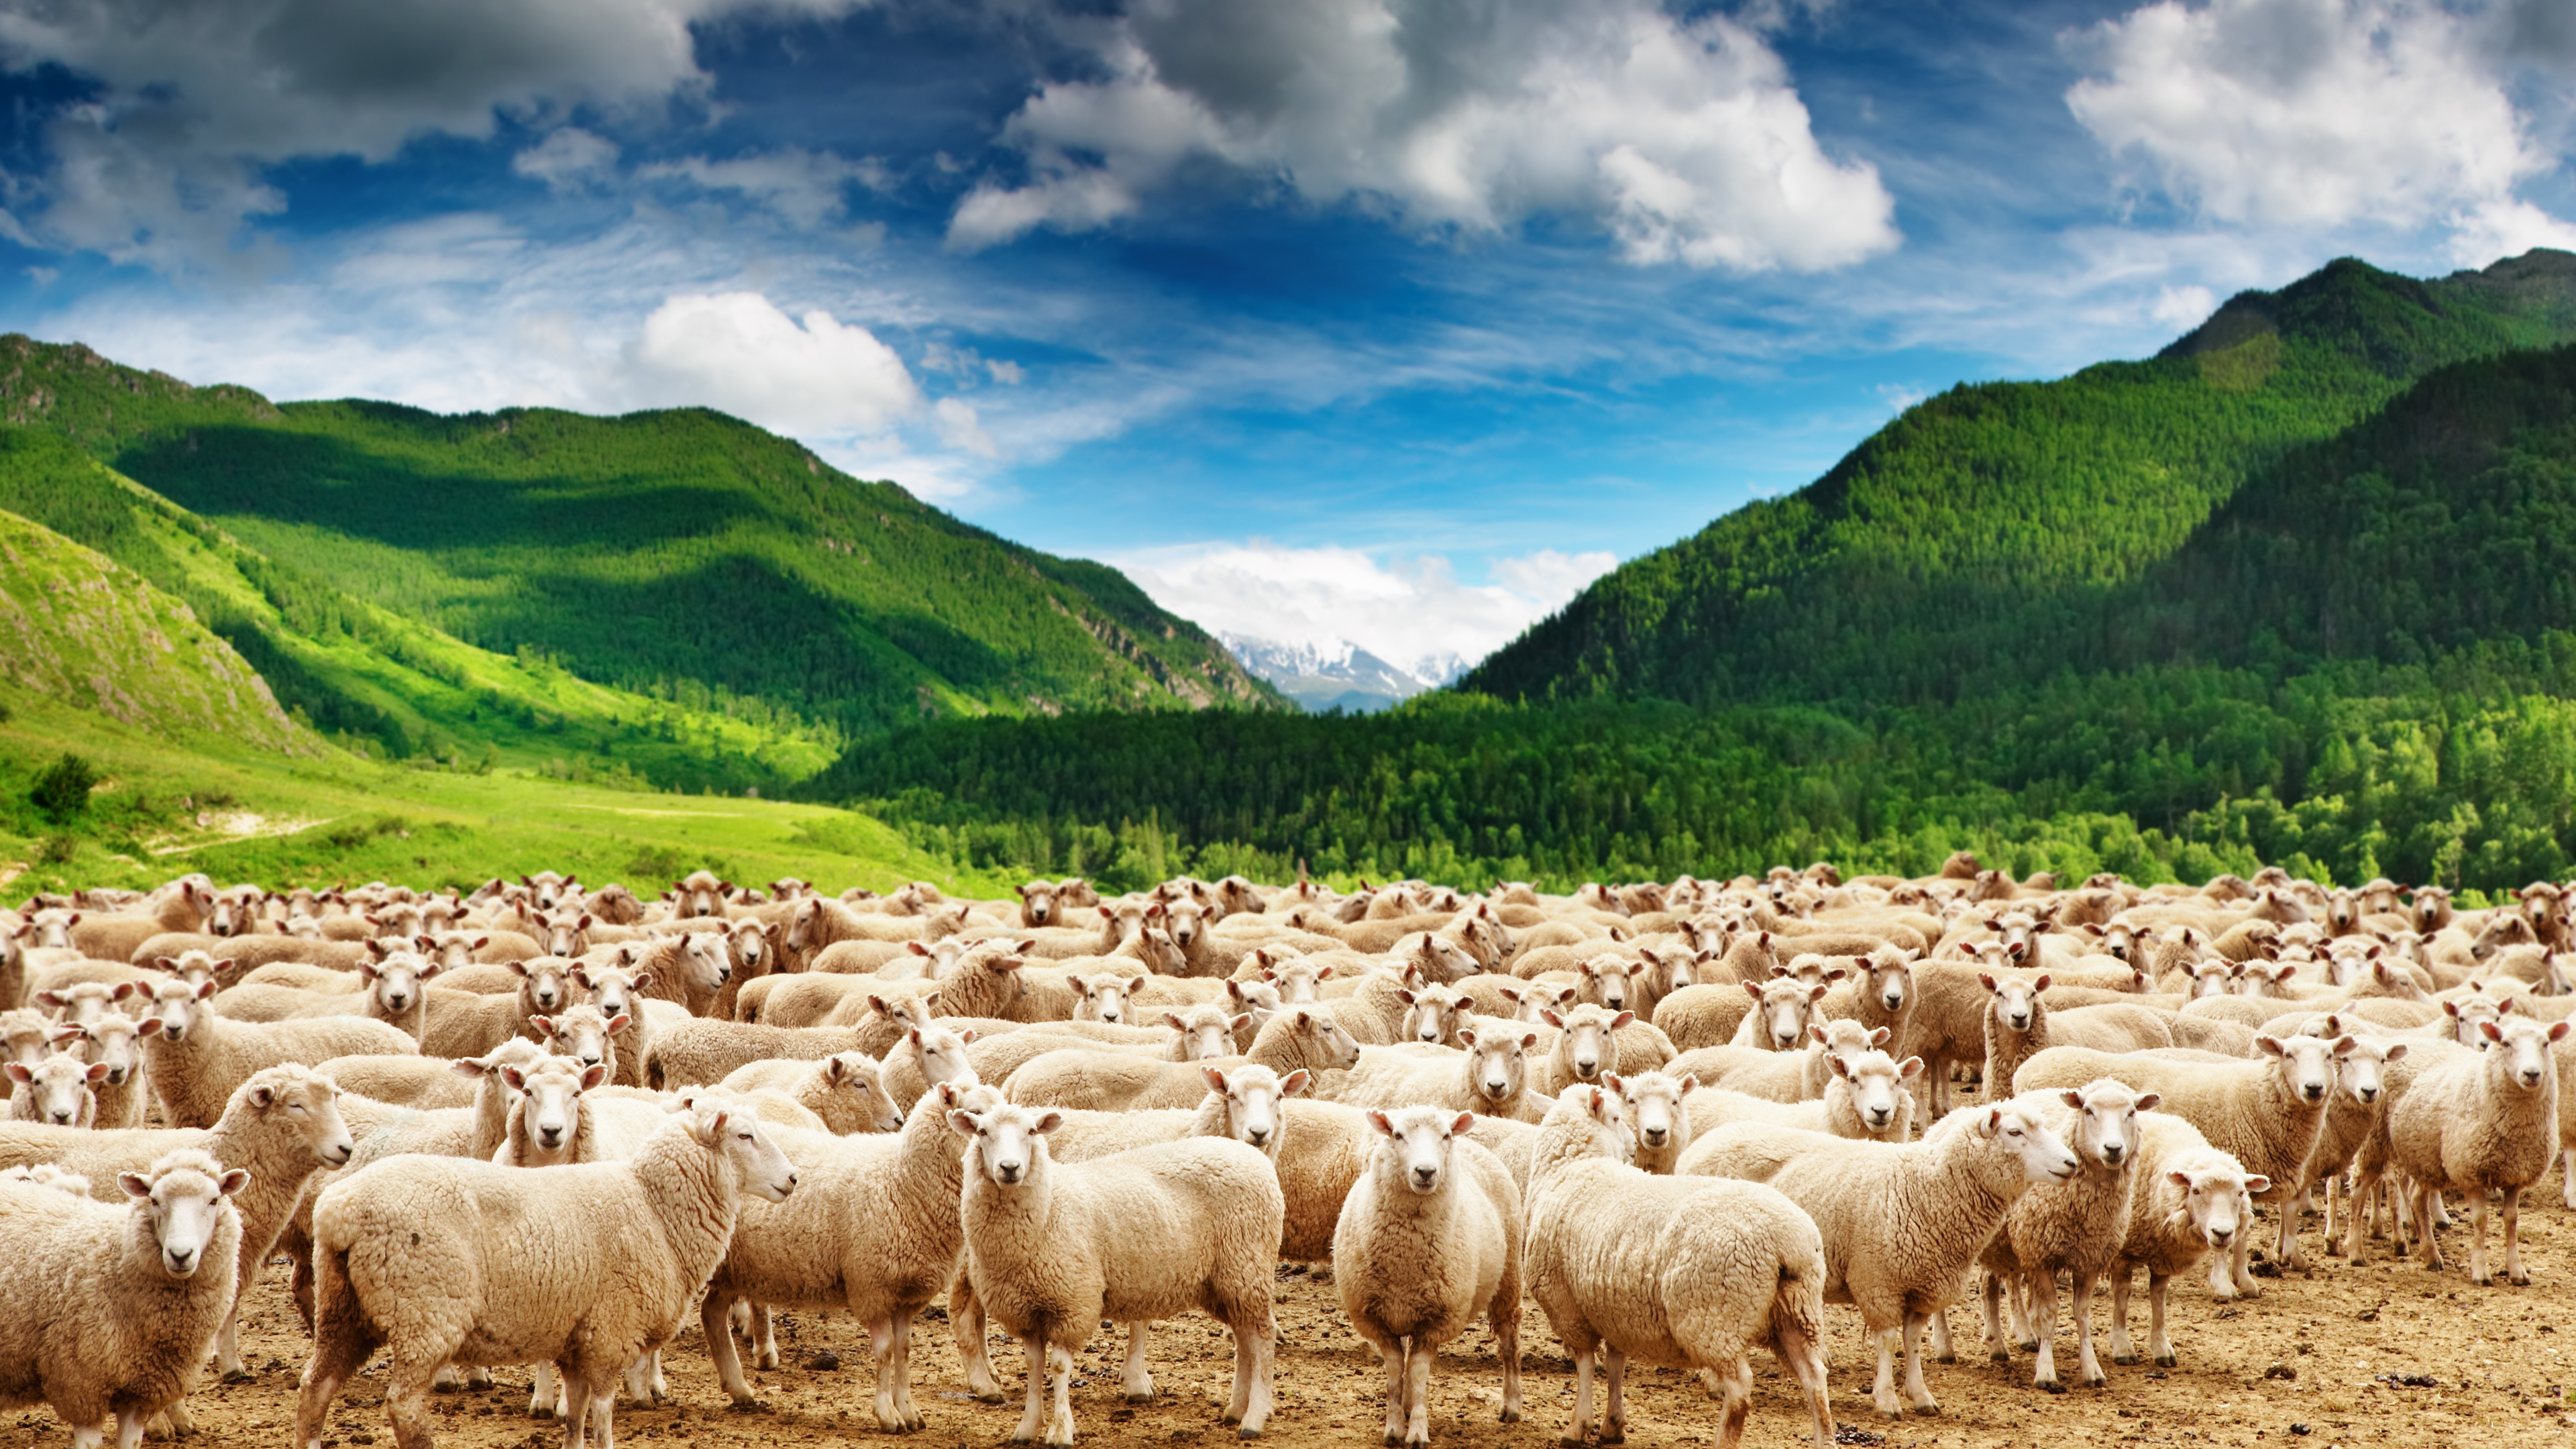 Sheep 4k Ultra HD Wallpaper